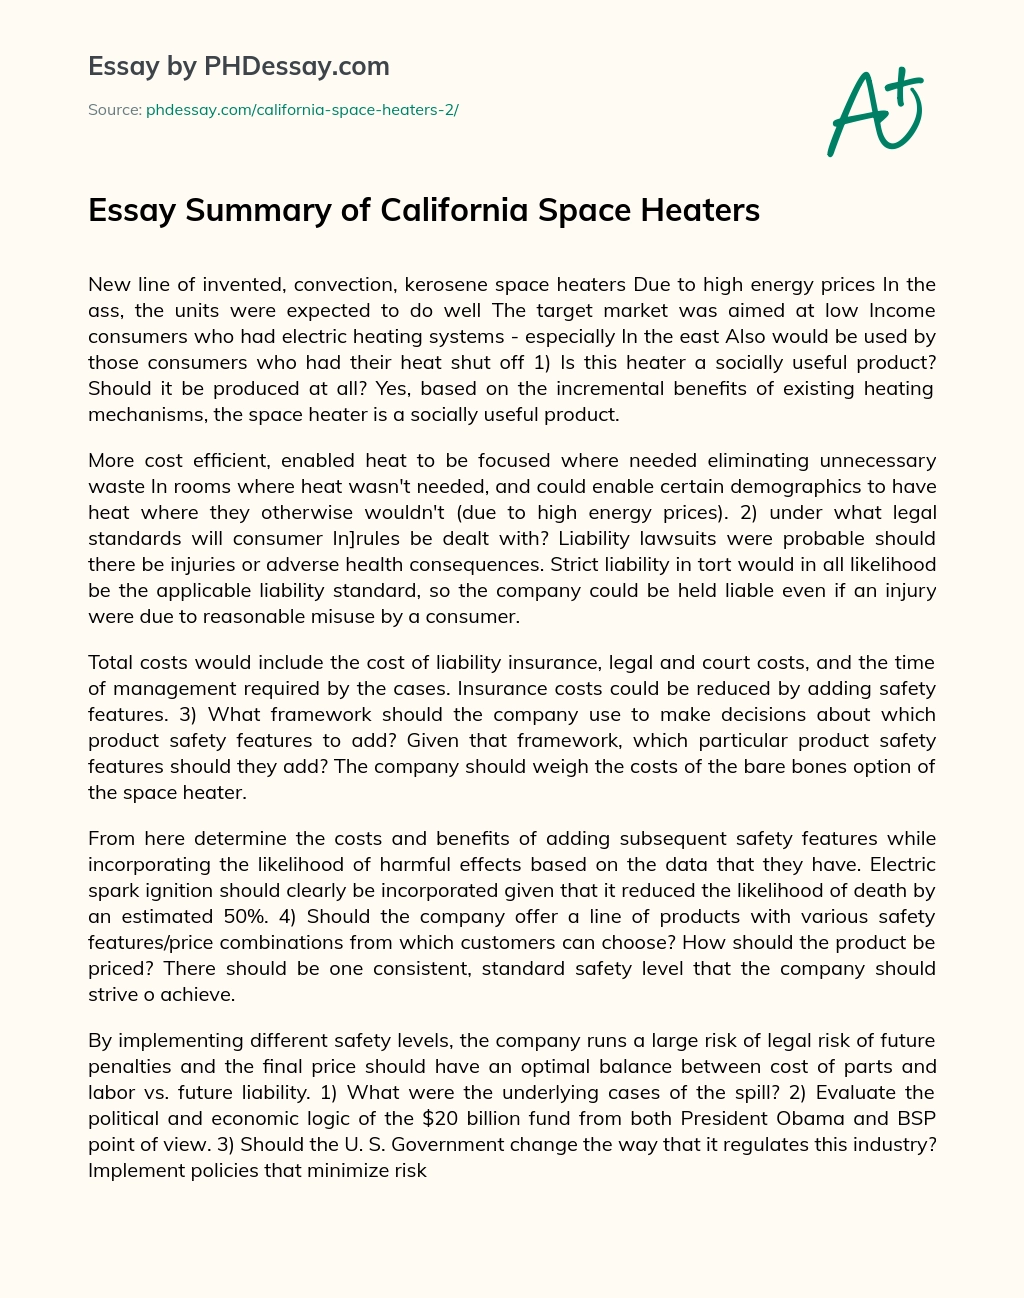 Summary of California space heaters essay